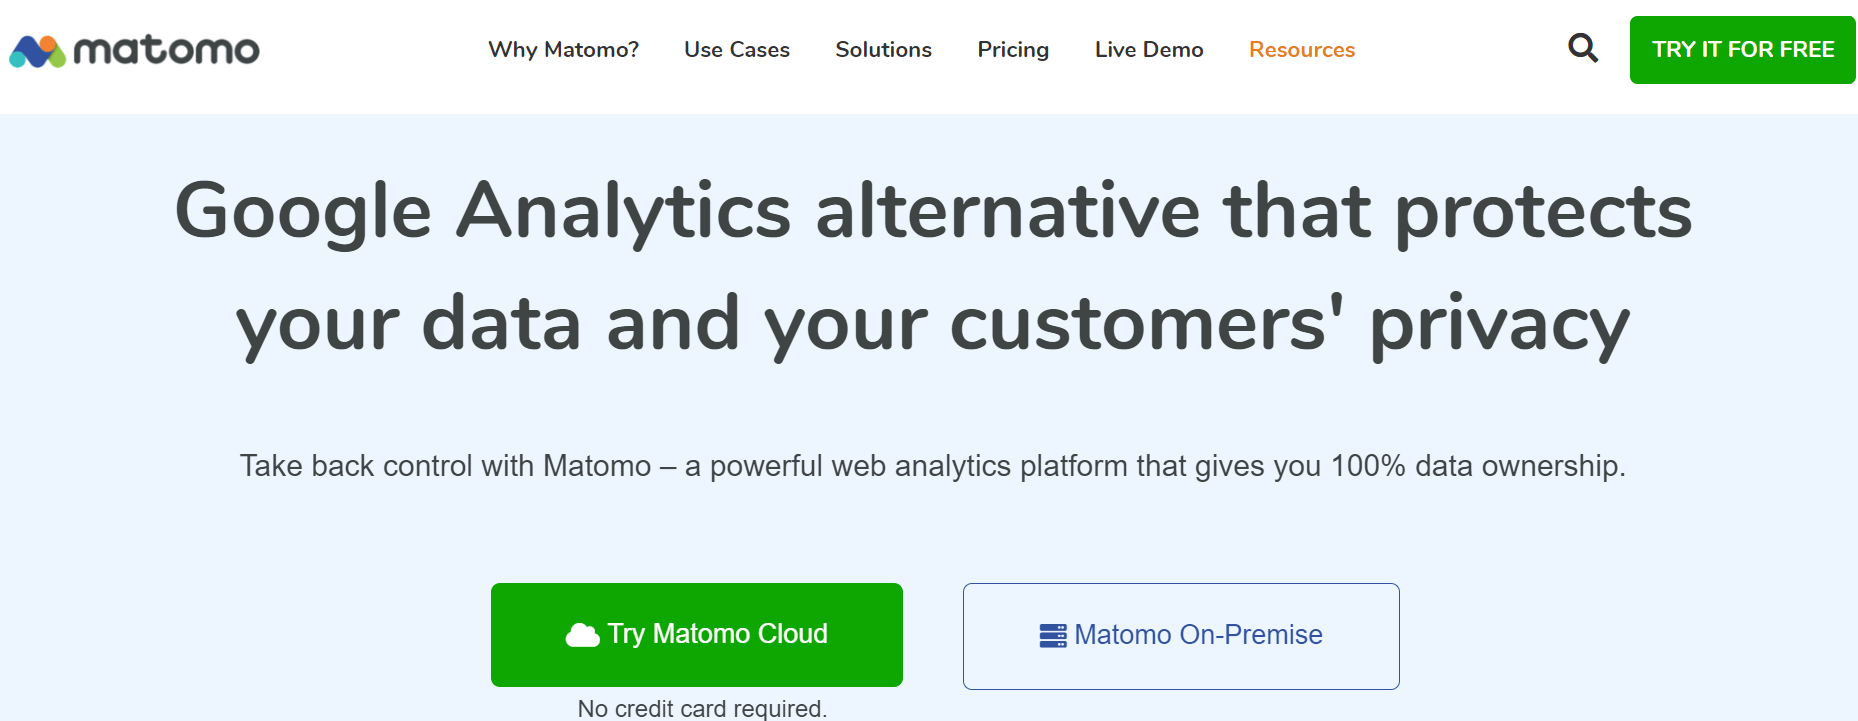 Matomo 是一个优秀的谷歌分析替代品。